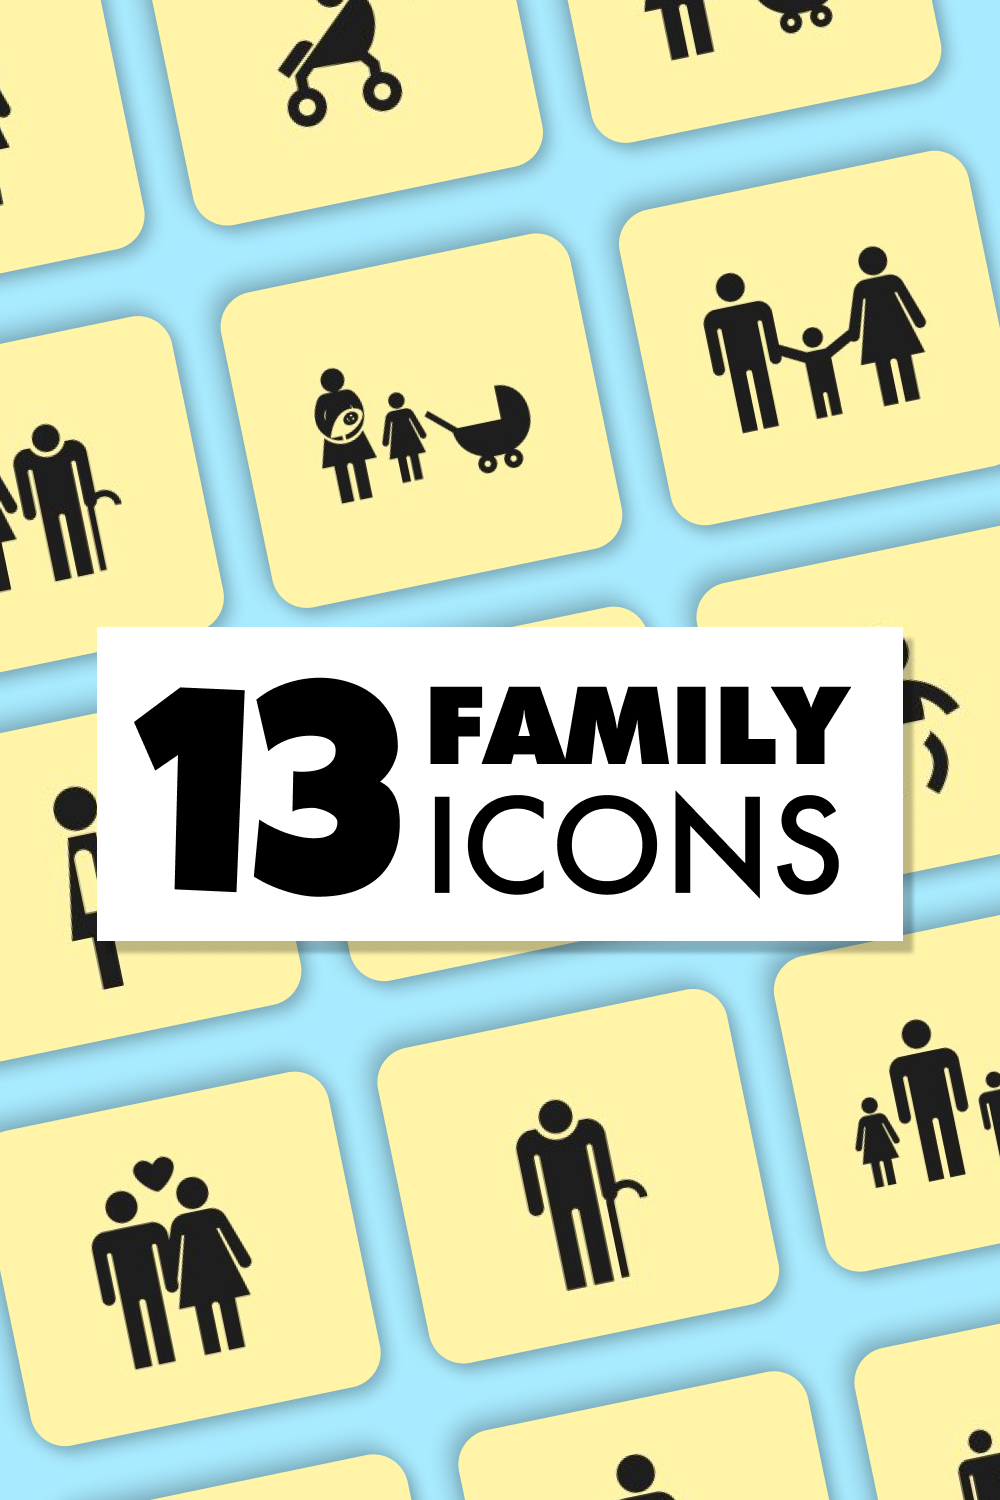 13 family icons pinterest 395